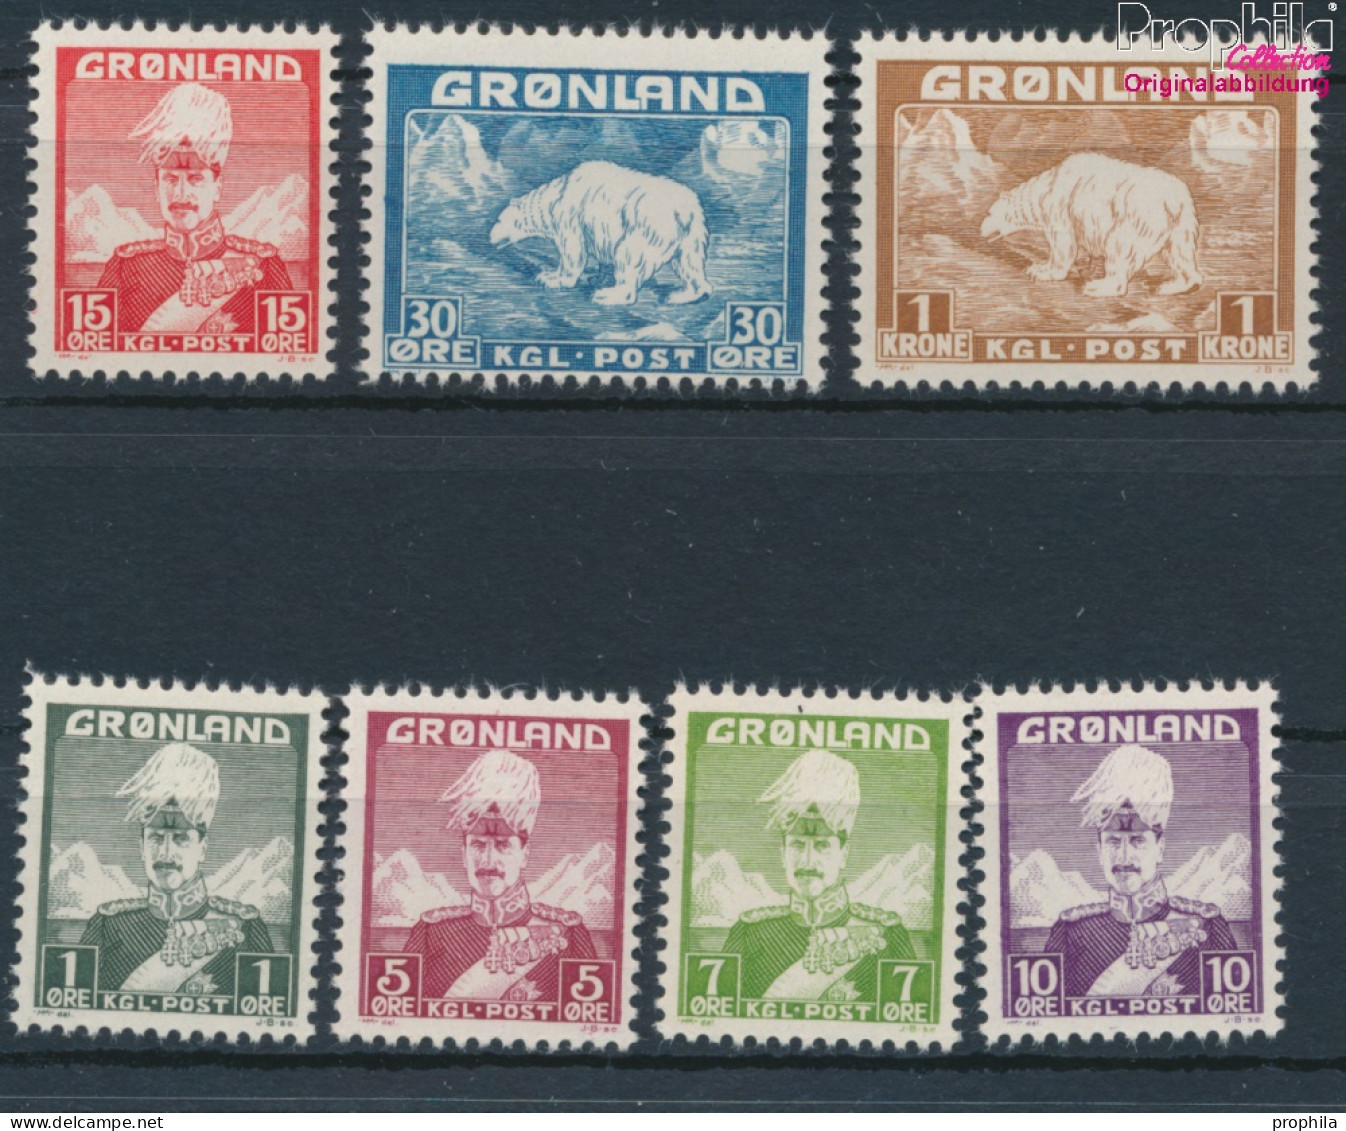 Dänemark - Grönland Postfrisch Christian X. 1938 König Christian X.  (10174226 - Used Stamps